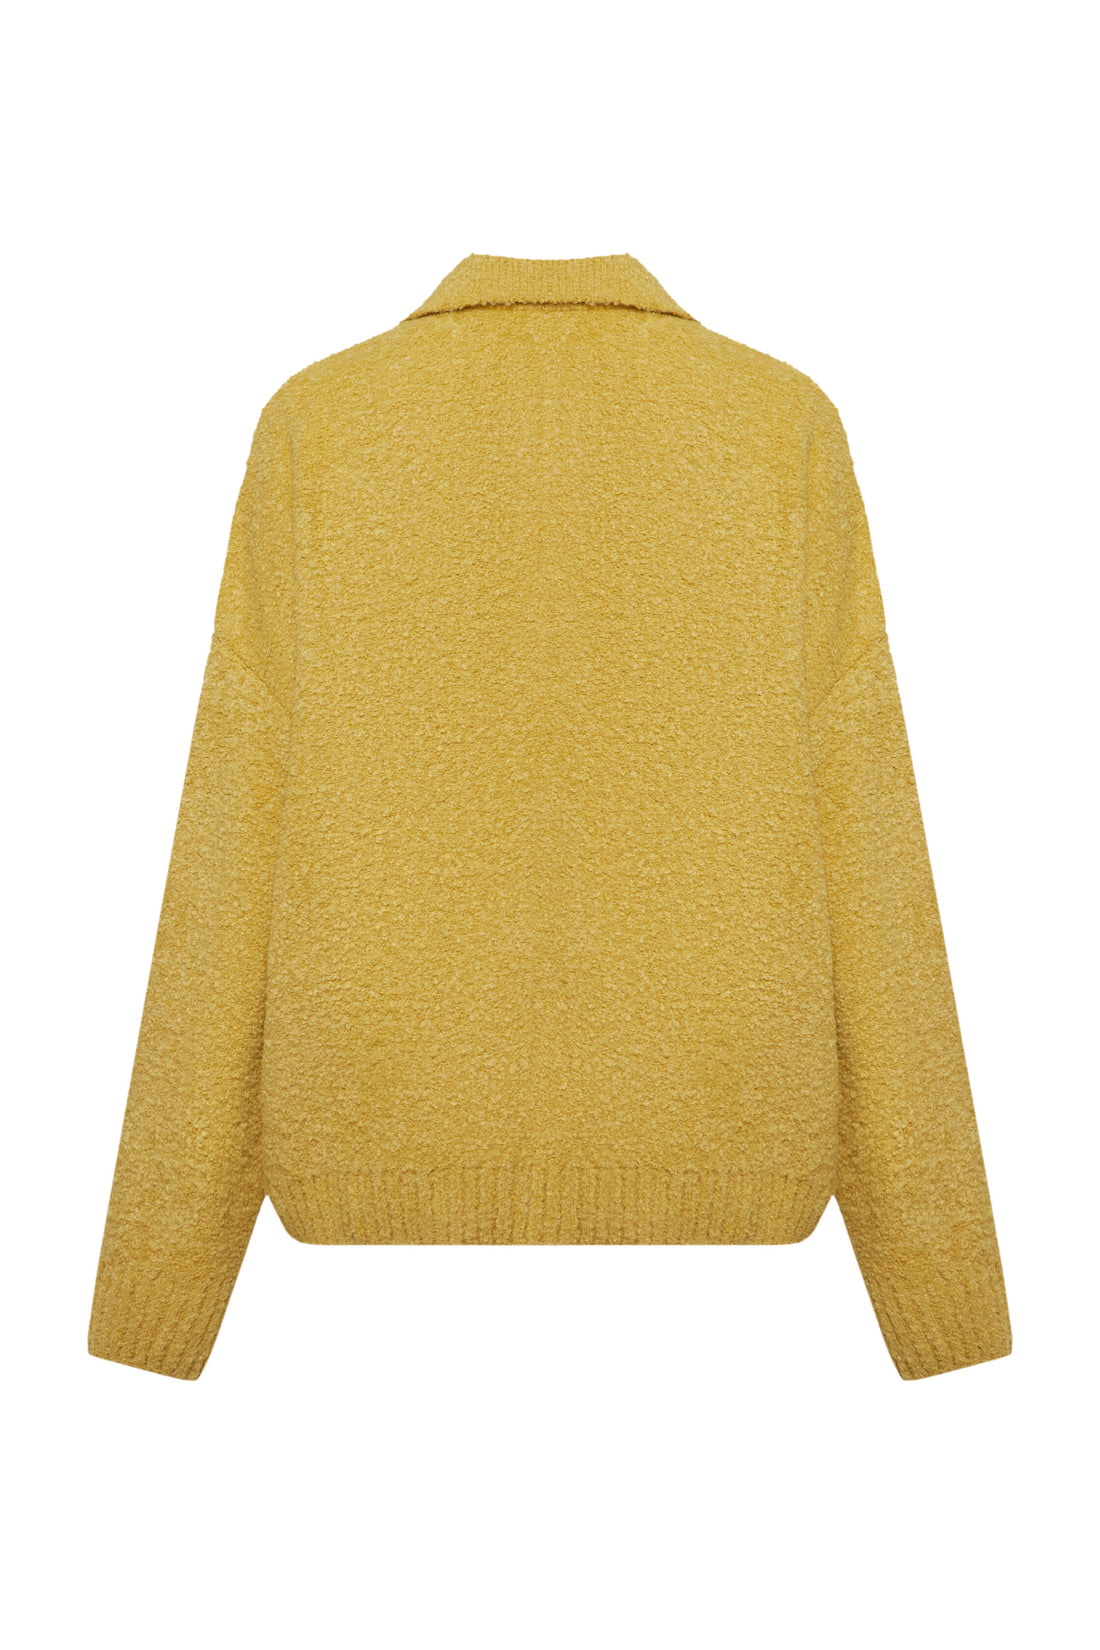 Bouclé sweater, yellow (0202)